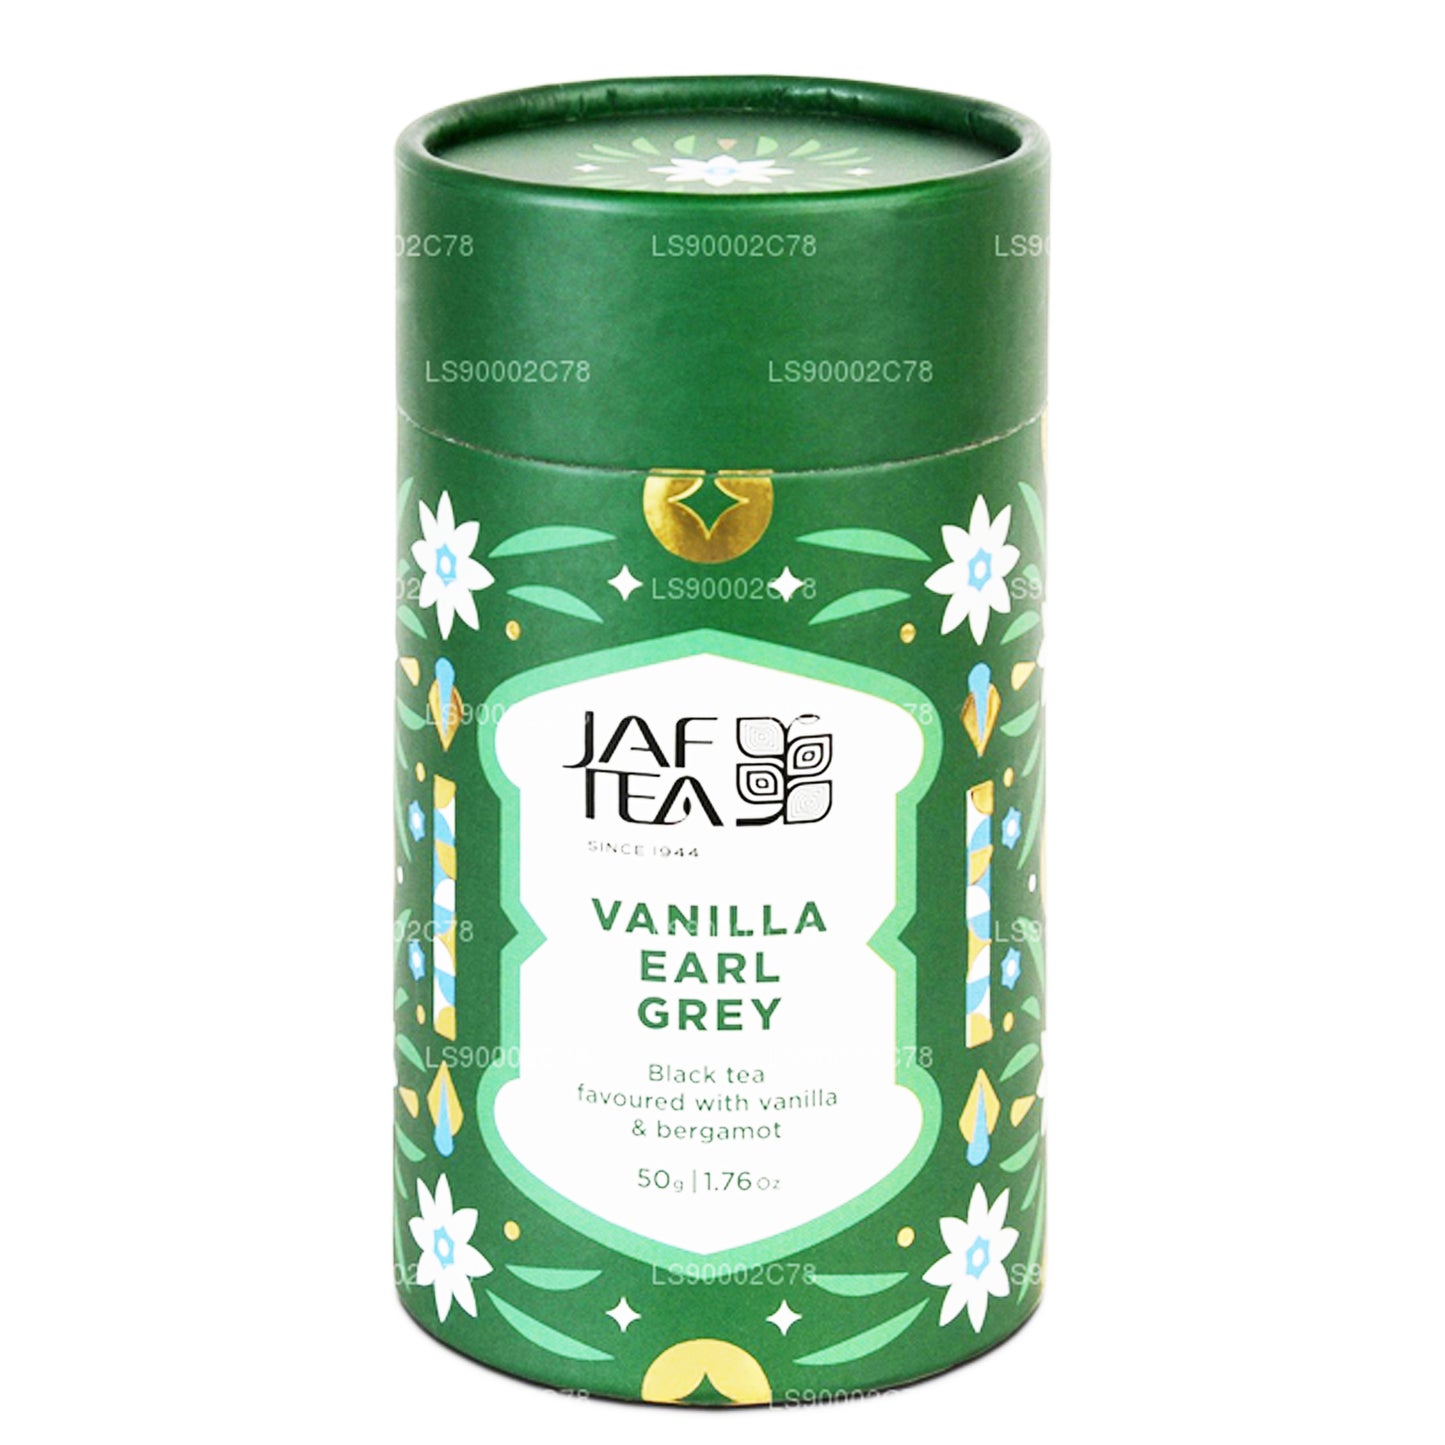 Jaf te Vanilla Earl Grey Black Tea aromatiseret med vanilje og bergamot (50g)